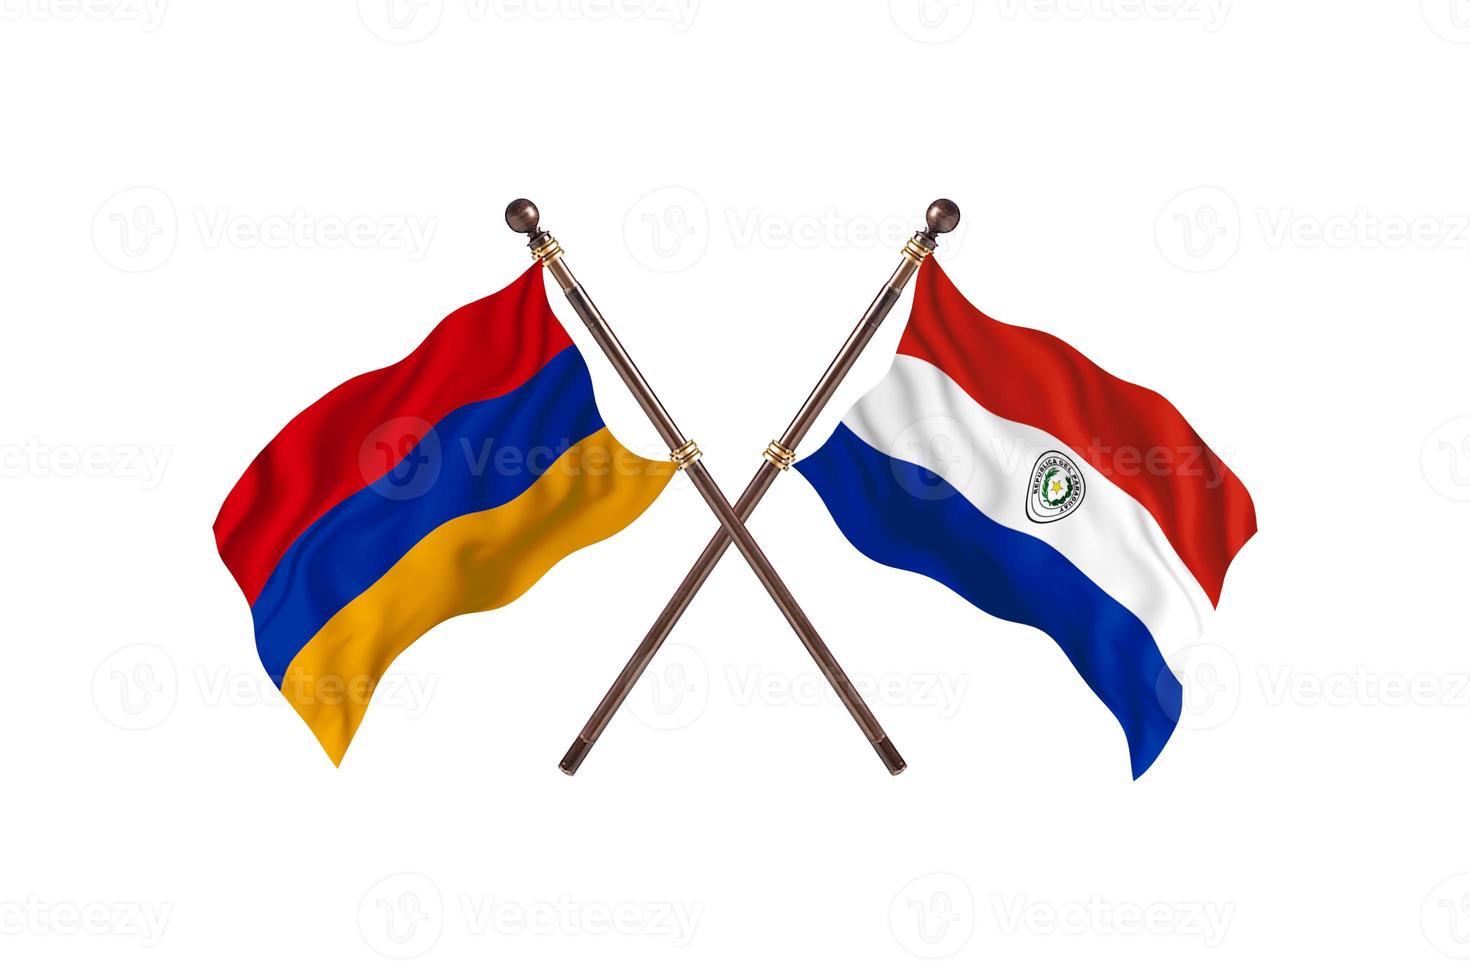 Armenië versus Paraguay twee land vlaggen foto